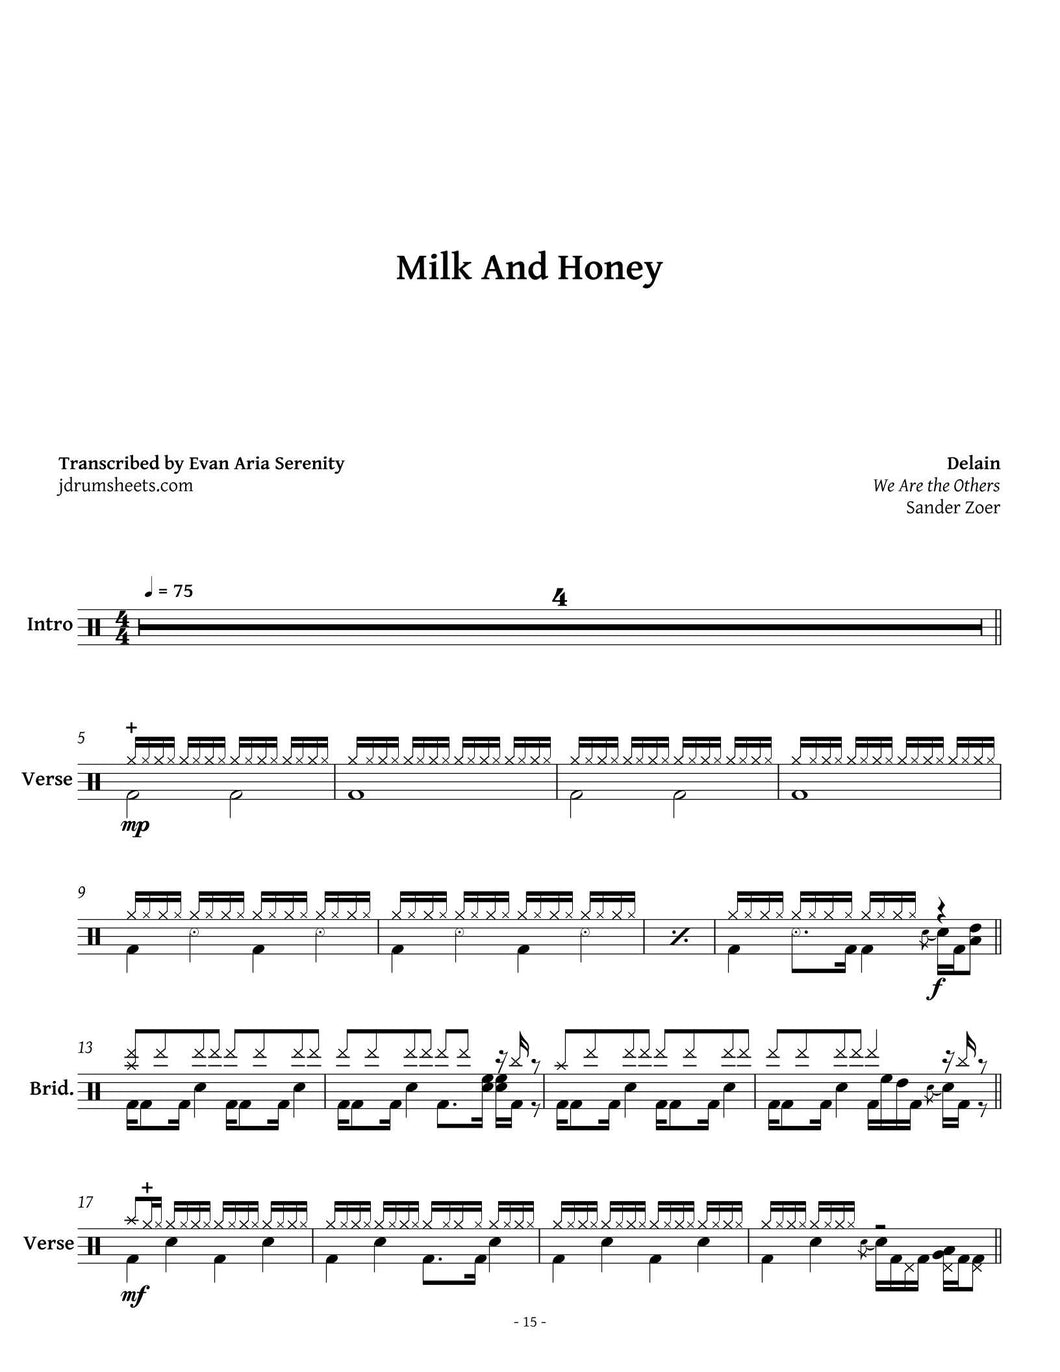 Milk and Honey - Delain - Full Drum Transcription / Drum Sheet Music - Jaslow Drum Sheets